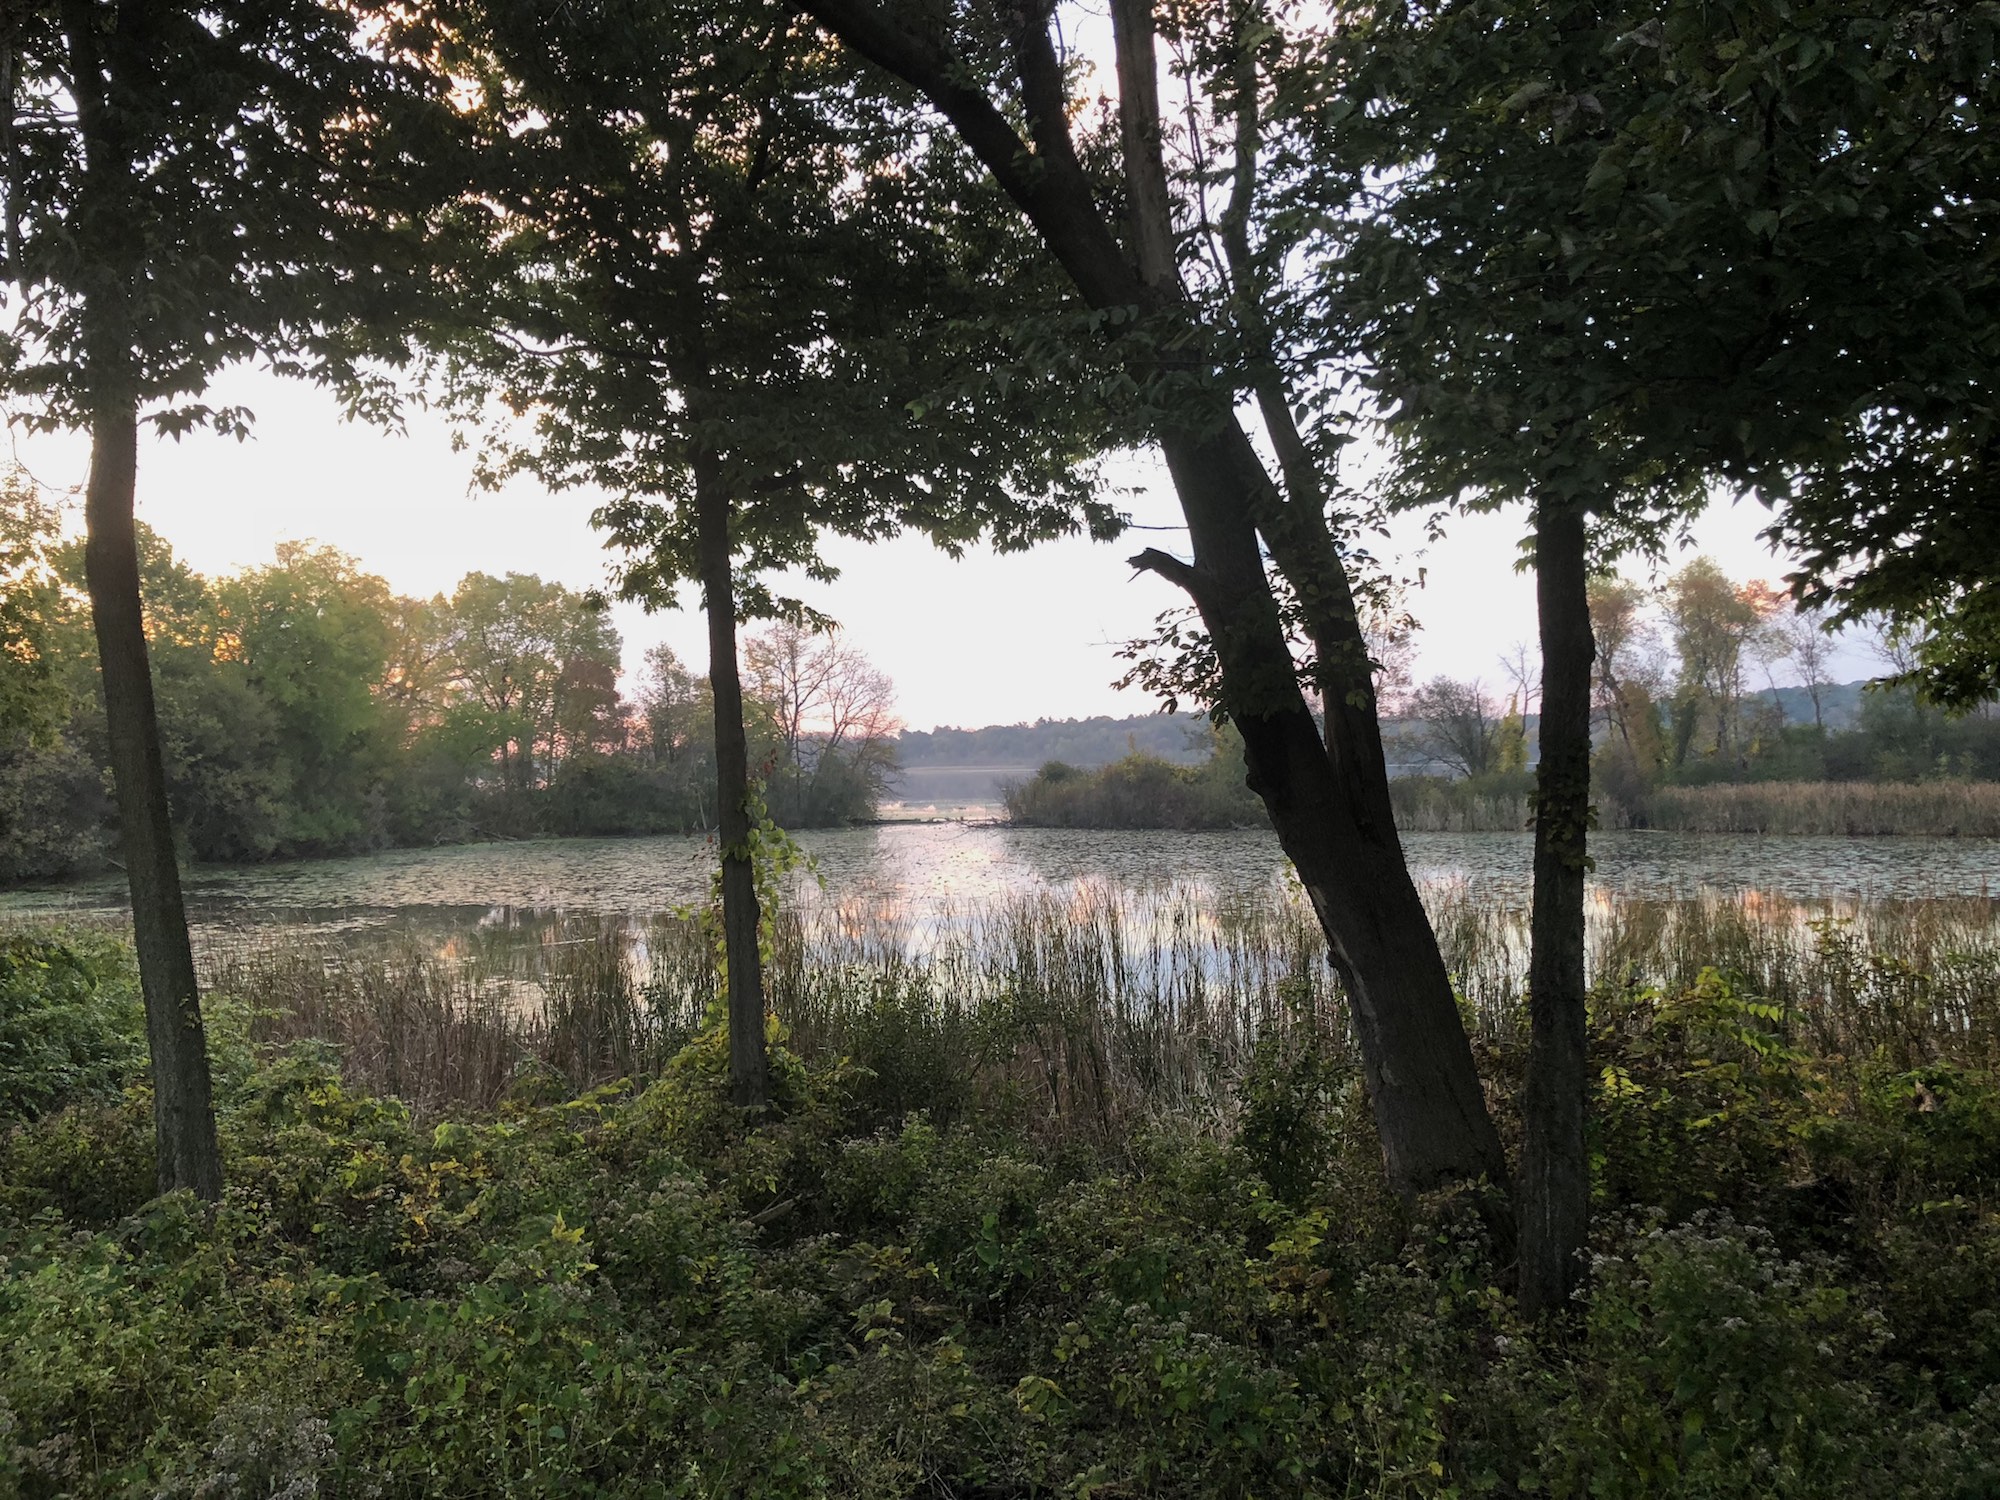 Ho-Nee-Um Pond on October 9, 2018 at sunrise.